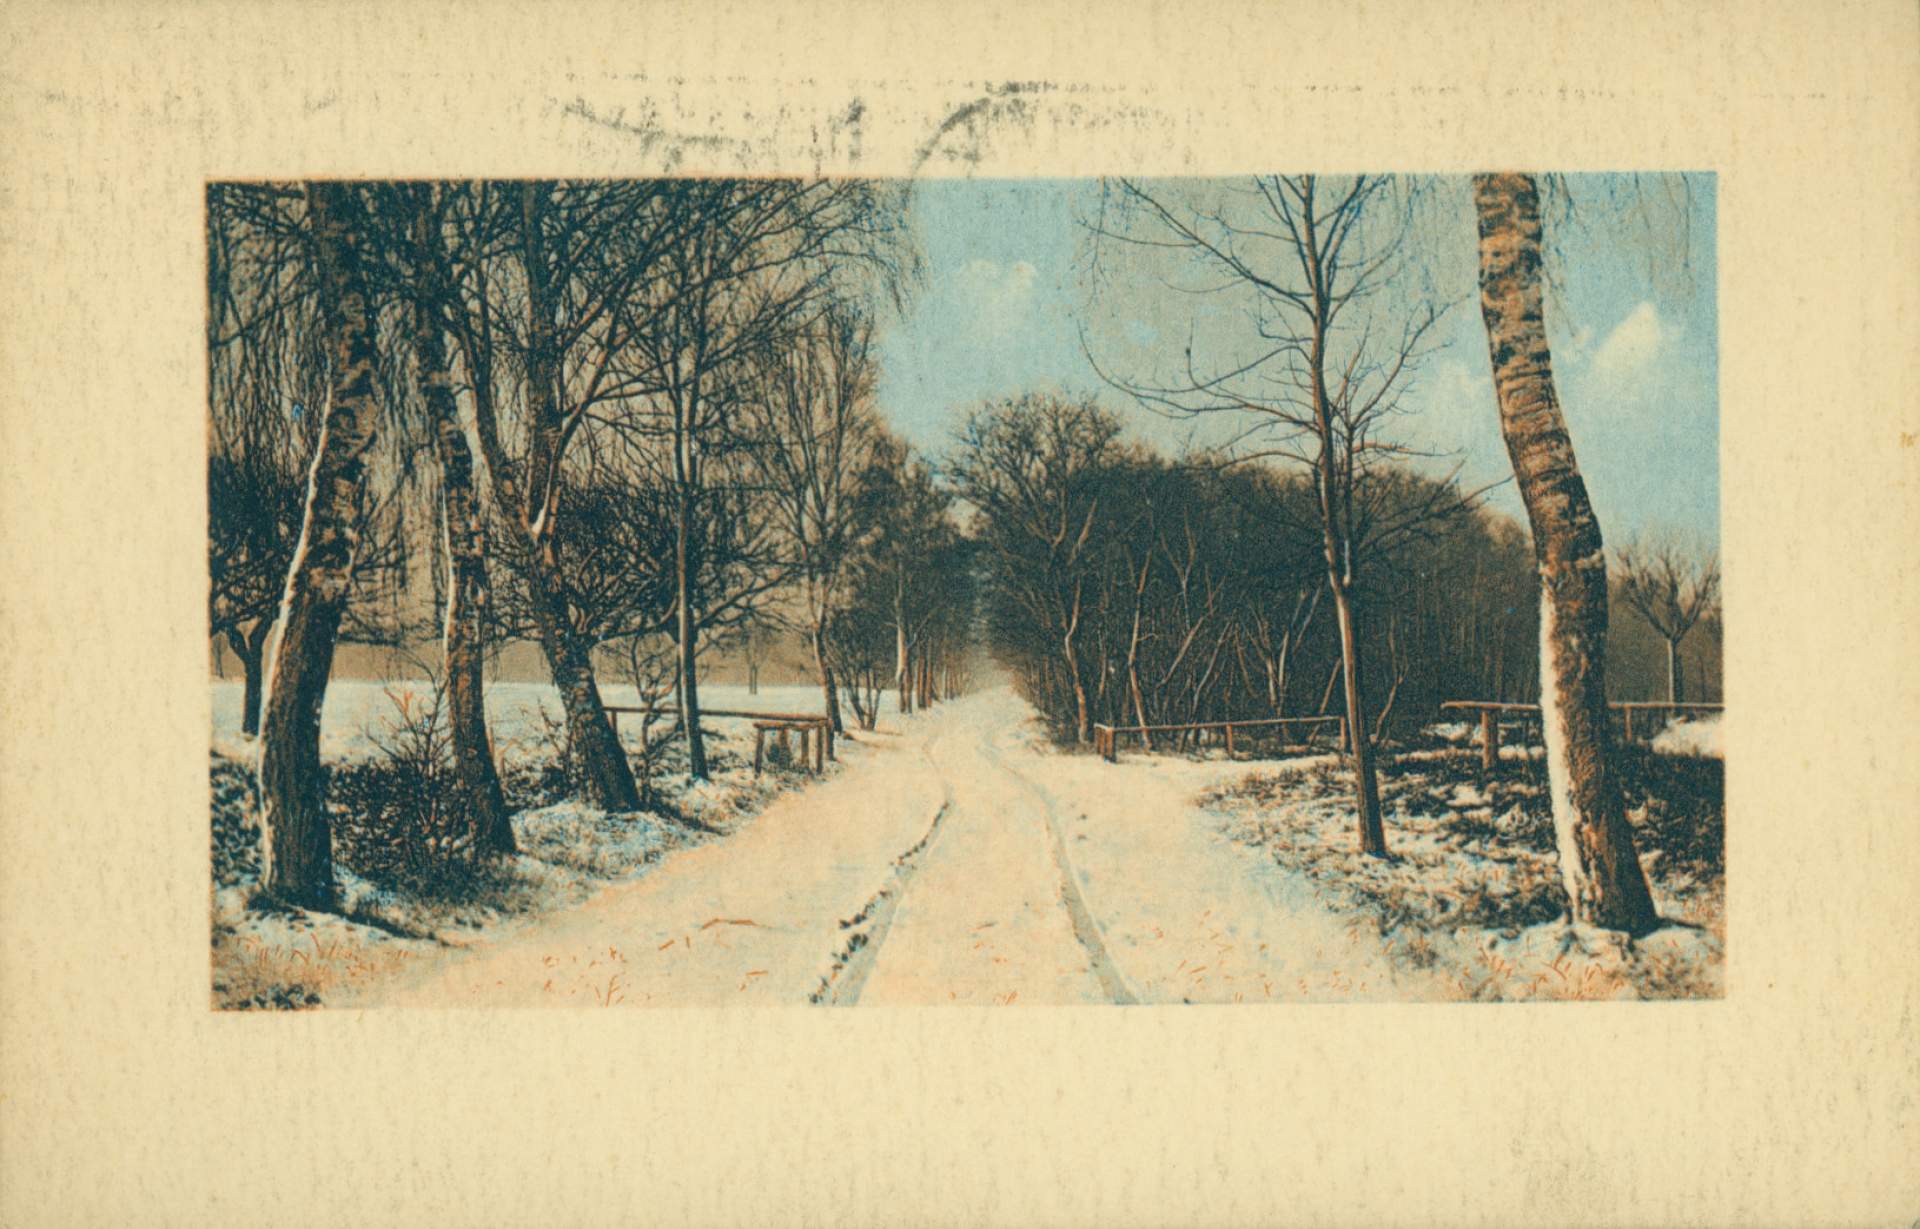 Charles E. Burchfield, Postcard to Arthur C. Thomas, February 22, 1910